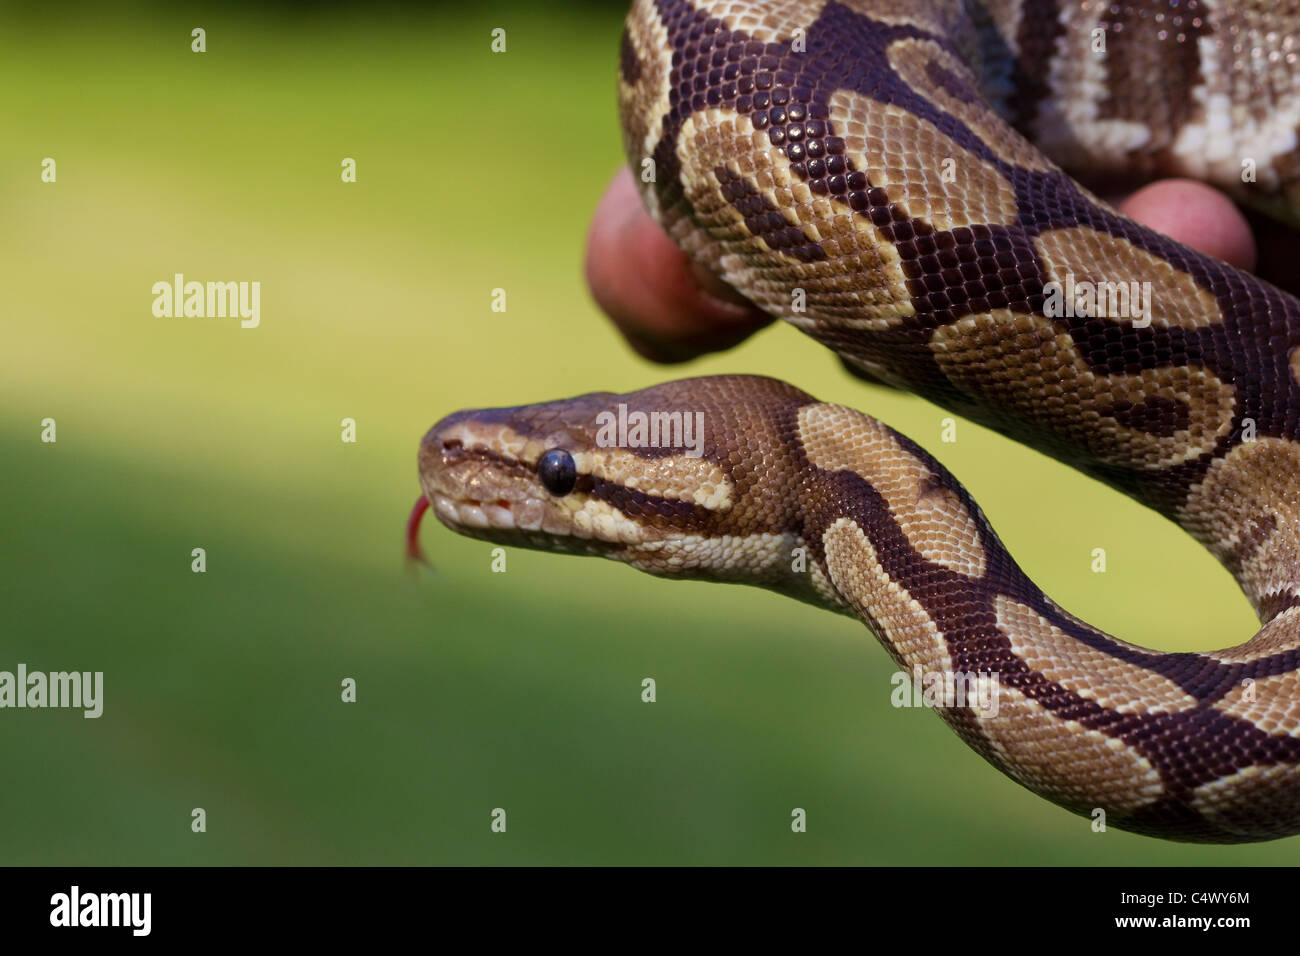 Ball python snake up close in hand, Python regius Stock Photo